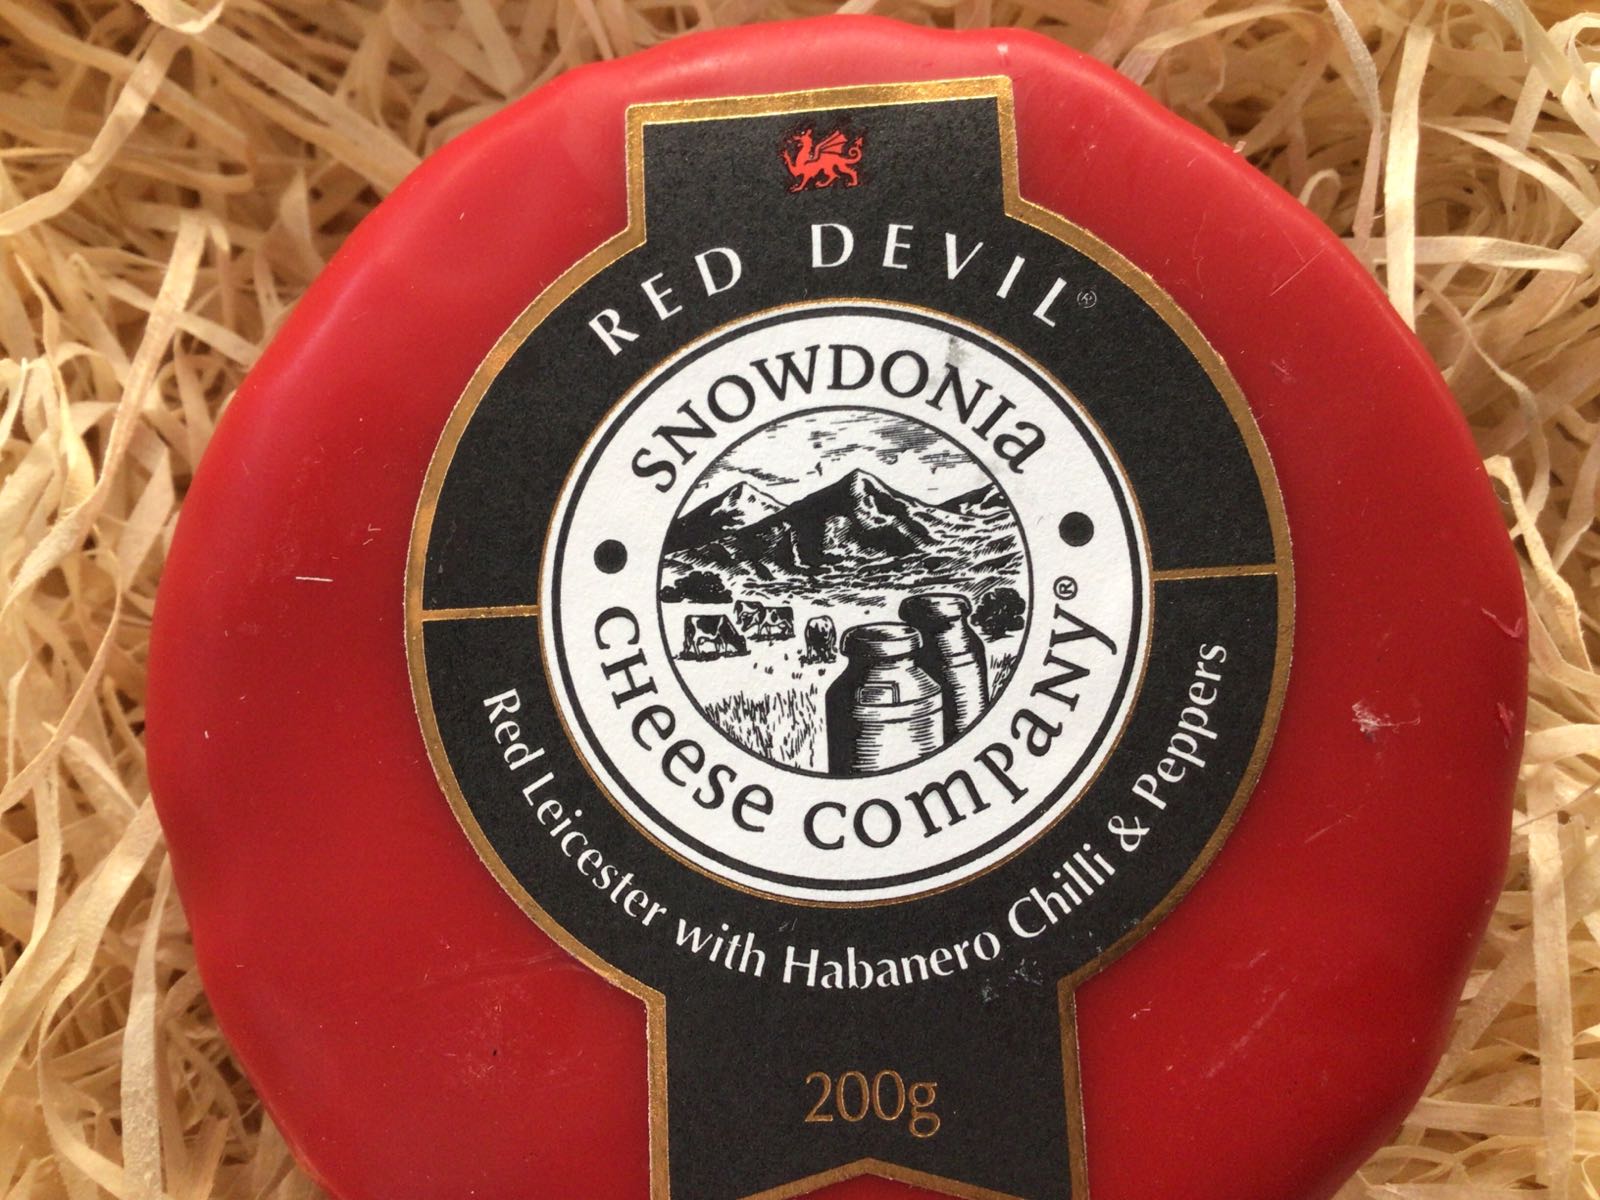 Snowdonia Red Devil